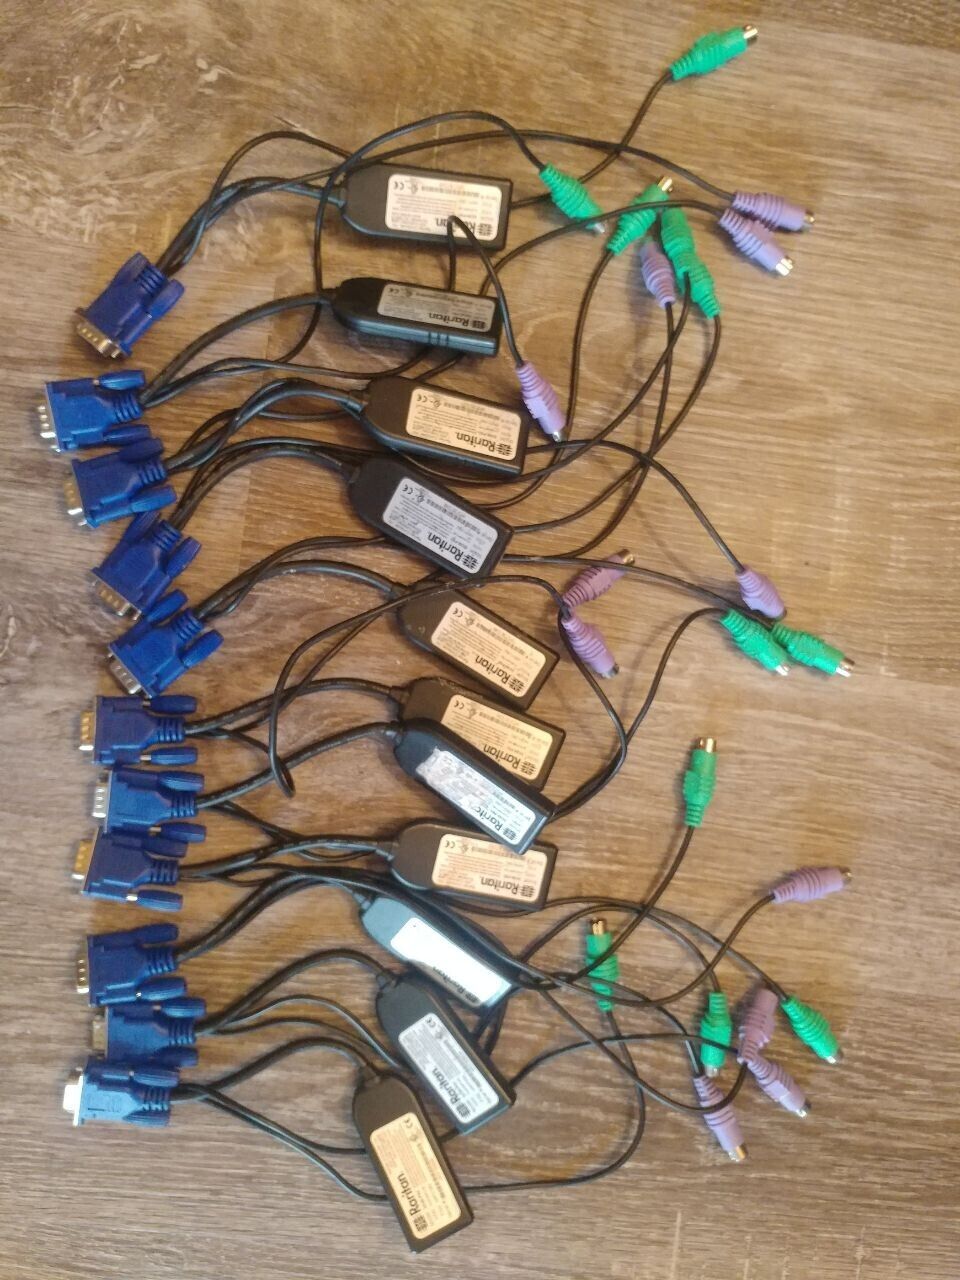 Lot of 11 Raritan D2CIM-PS2 Cables, for Dominion KX III, II KVM, used